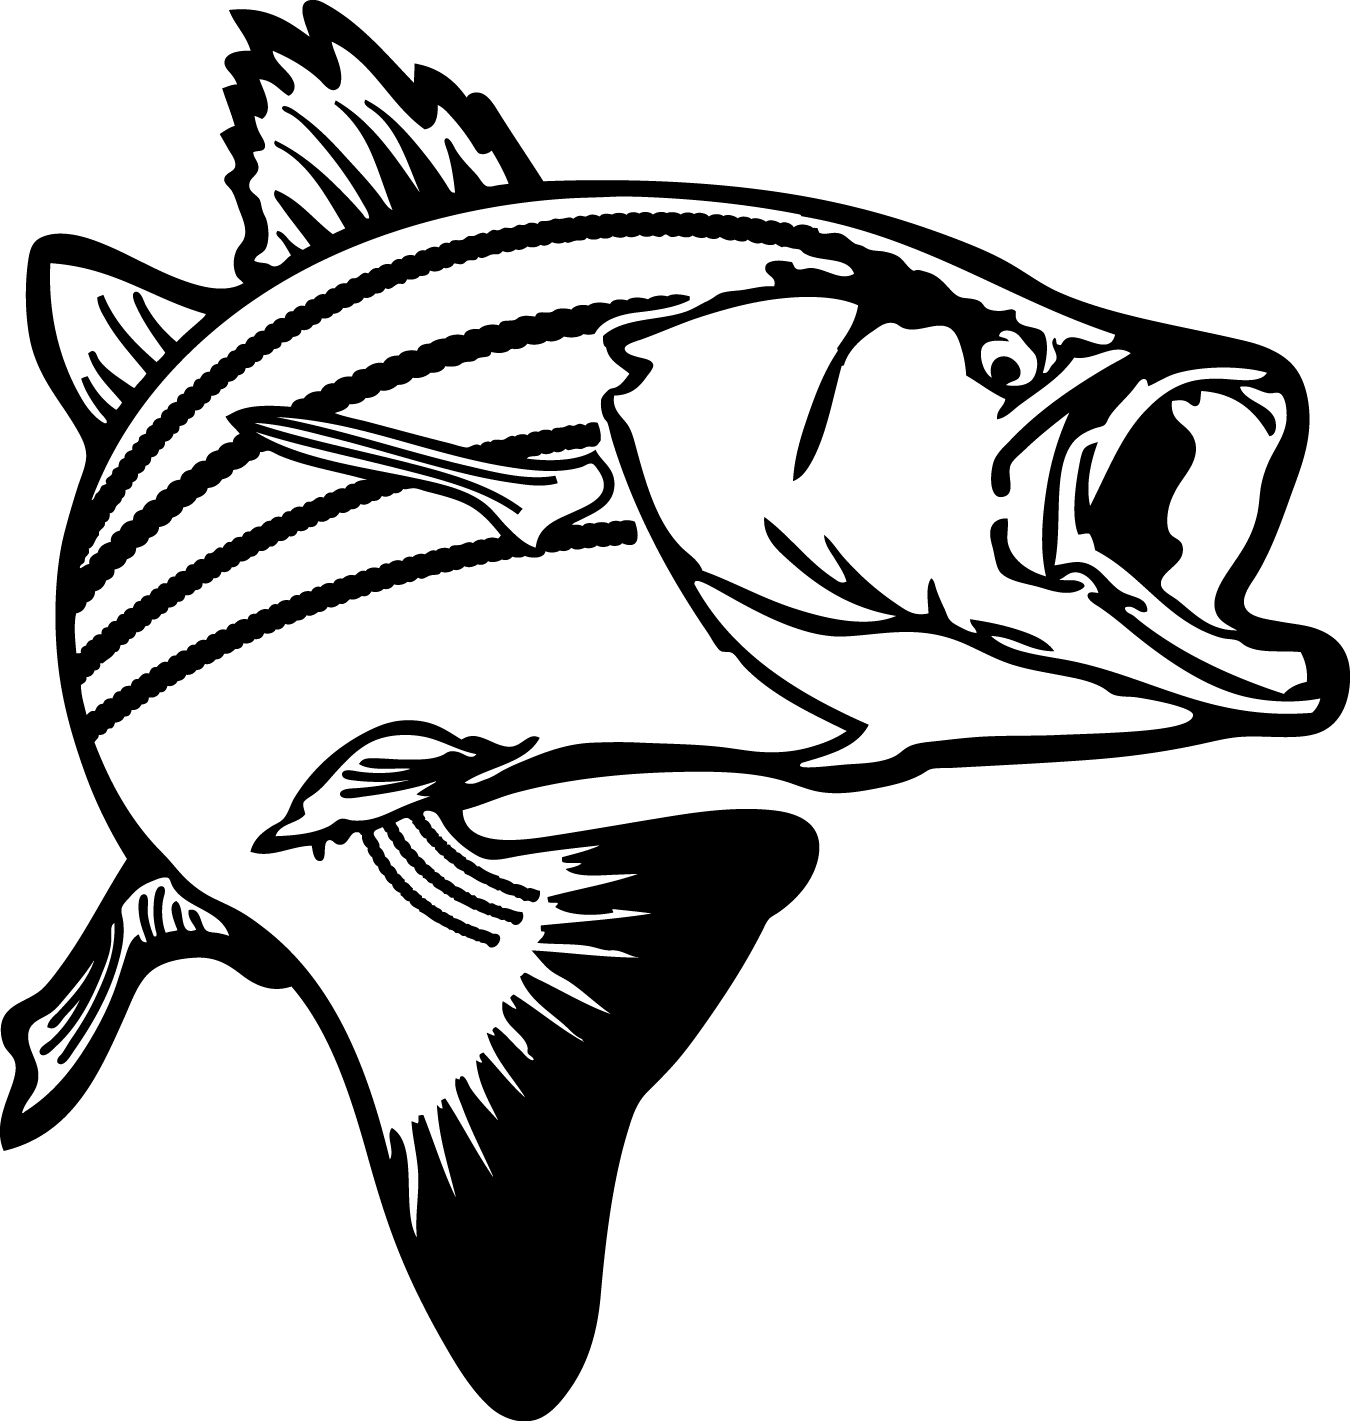 Bass fish vector clipart